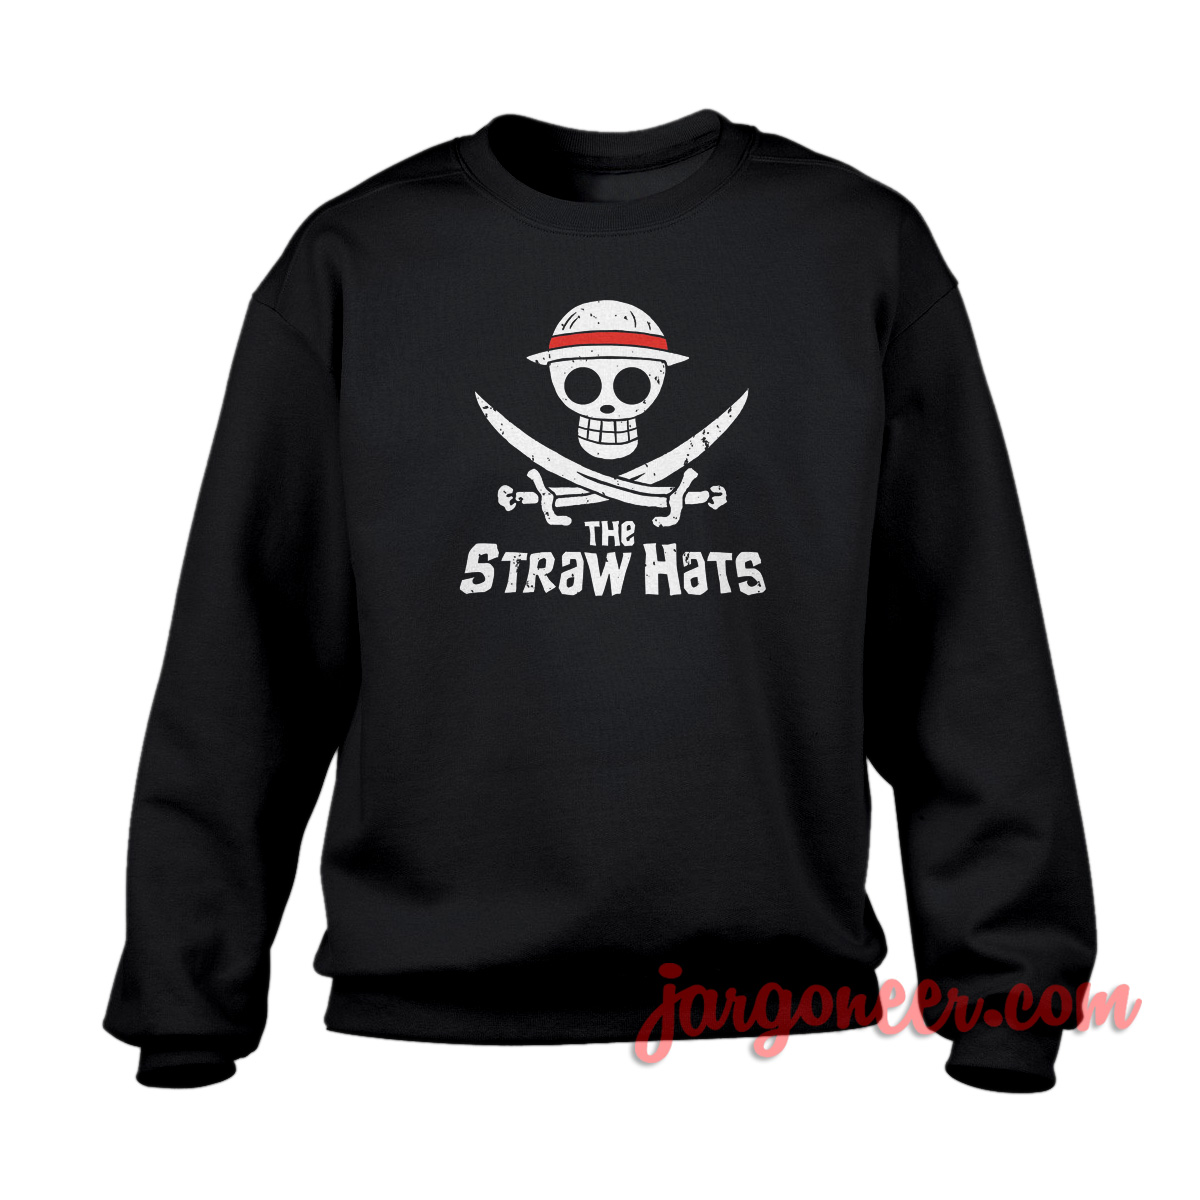 The Straw Hats - Shop Unique Graphic Cool Shirt Designs